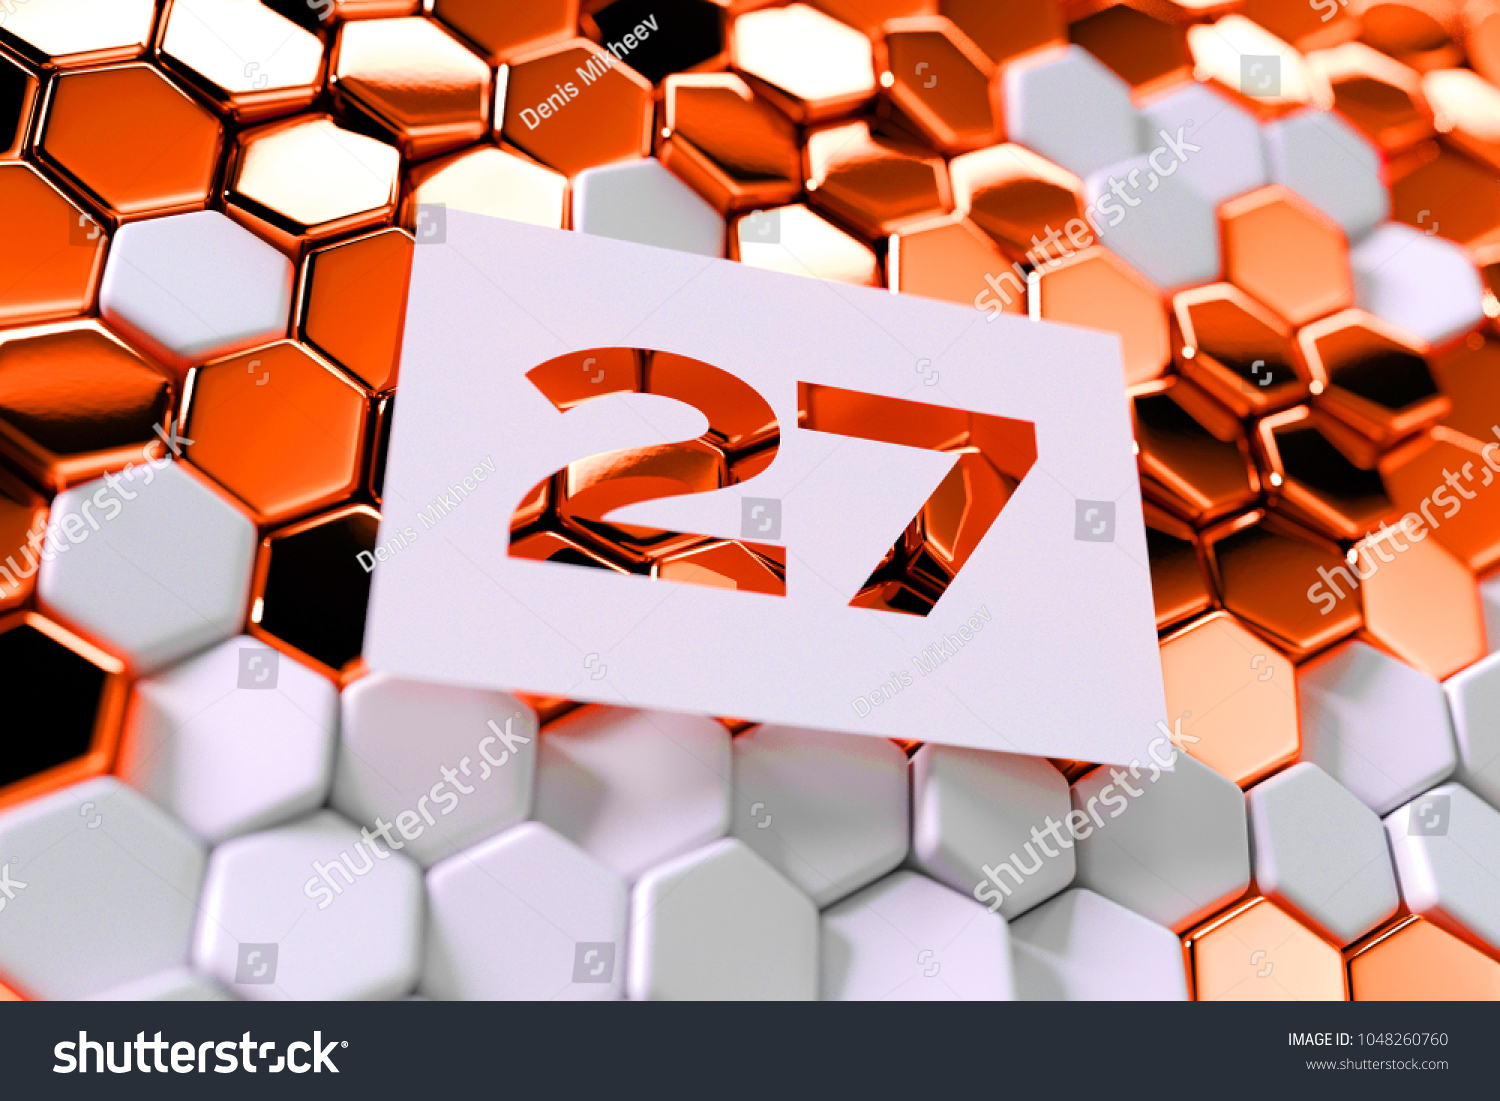 27 white and orange